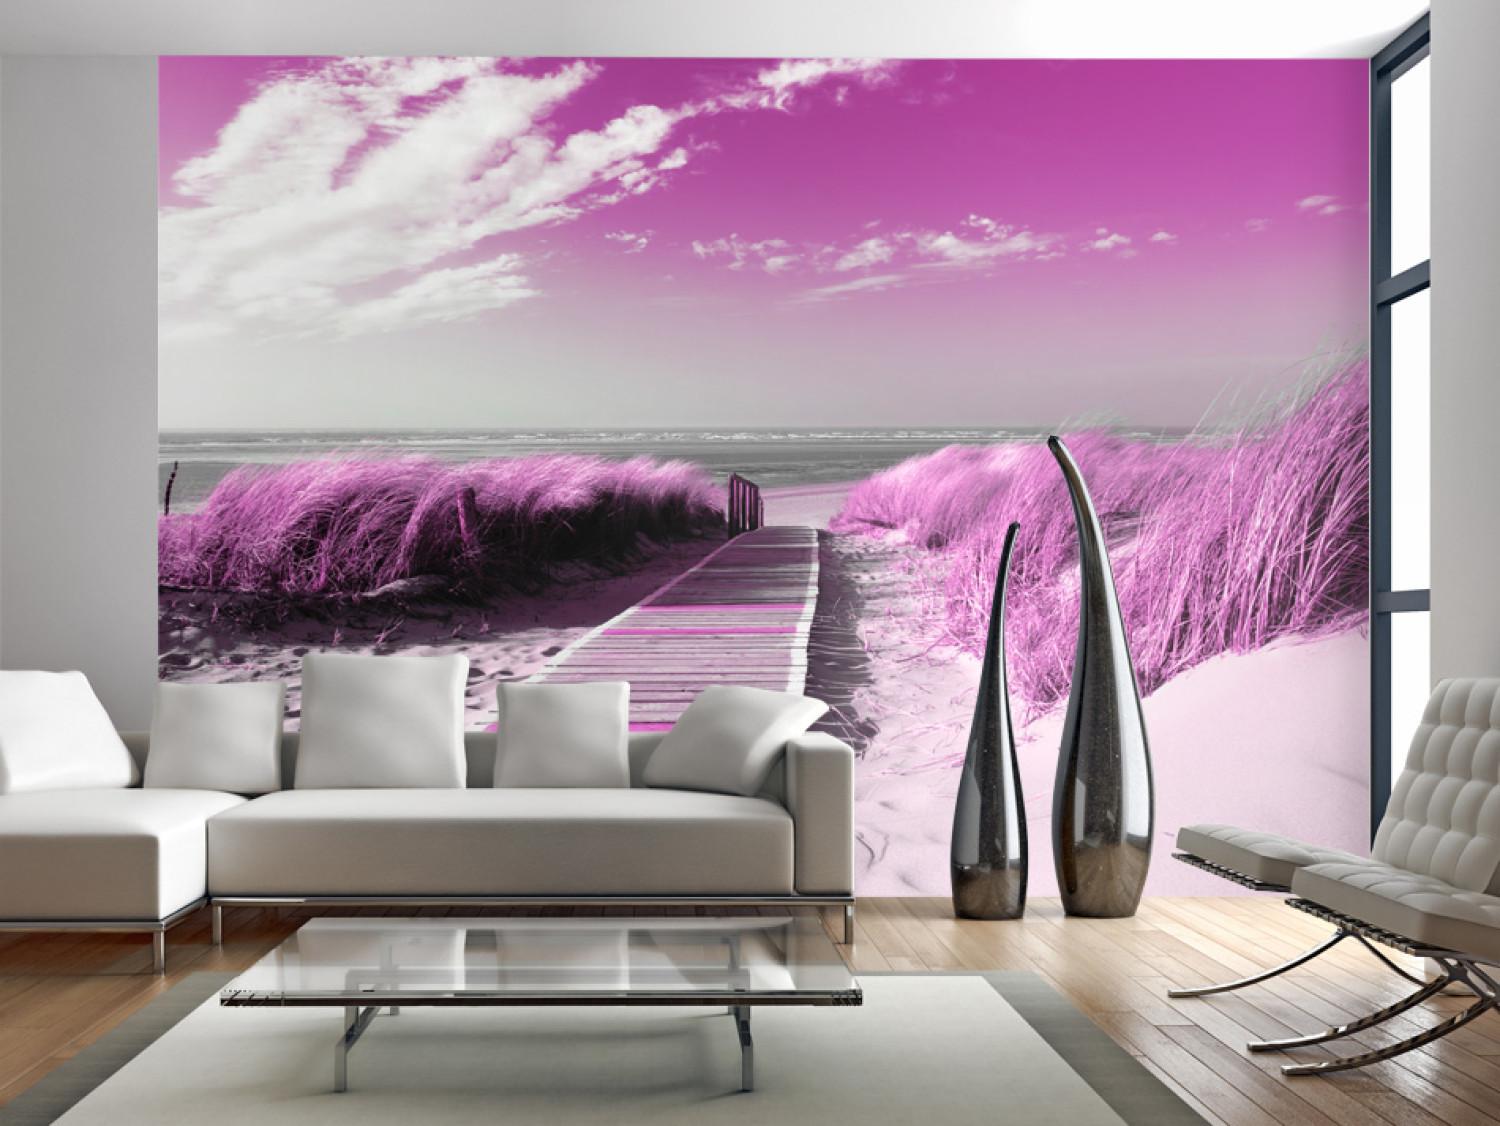 Fotomural a medida Descenso de madera - paisaje violeta de una playa arenosa junto al mar